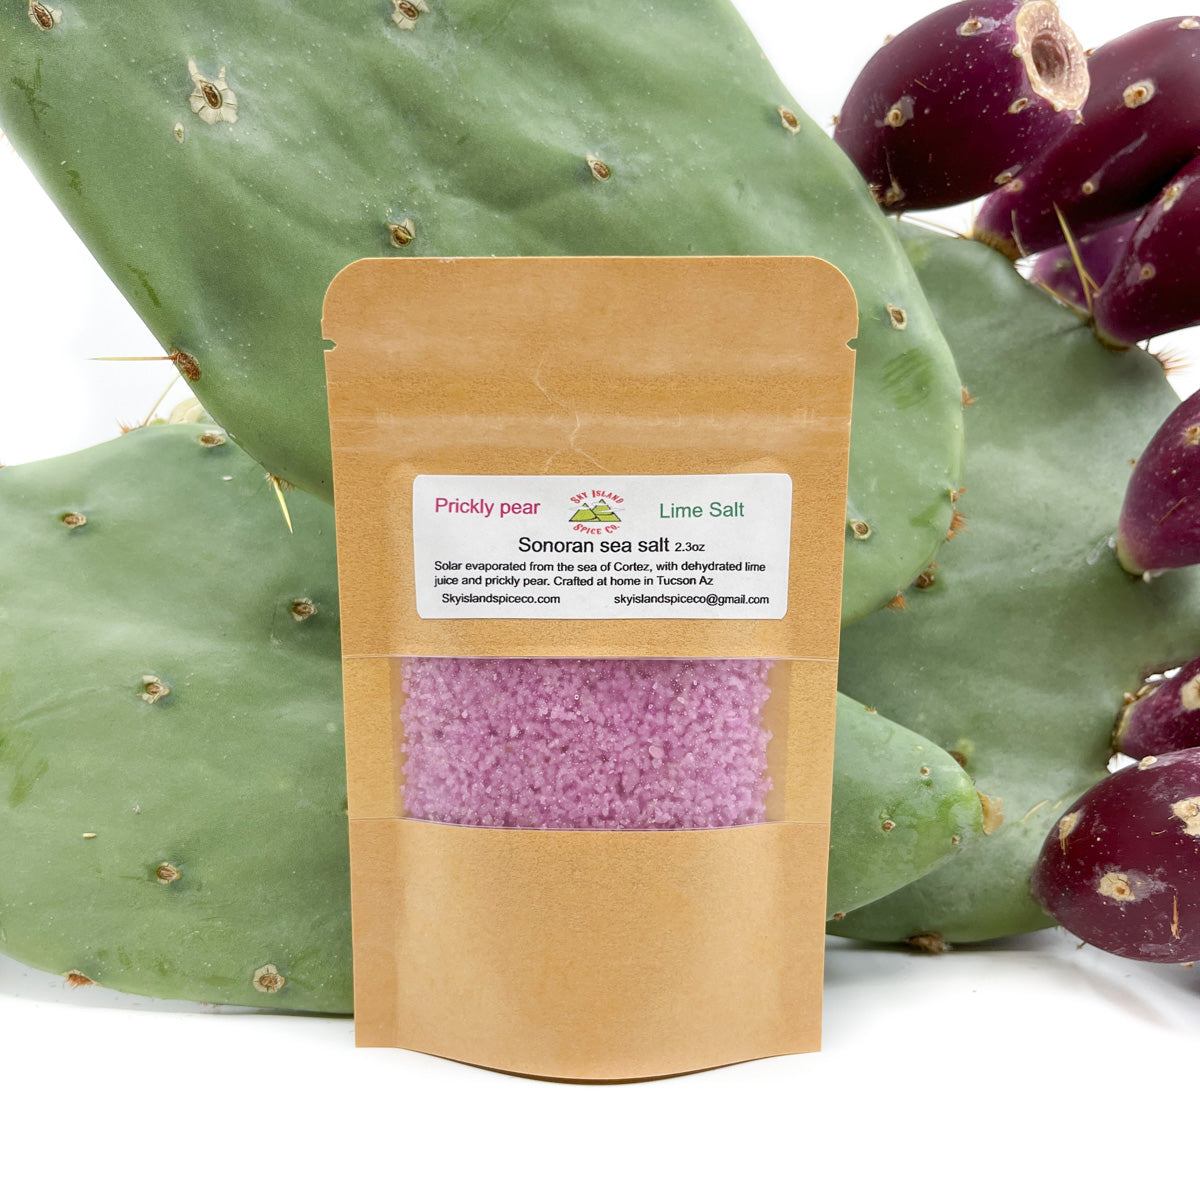 Sonoran Sea Salt - Prickly Pear/Lime Salt